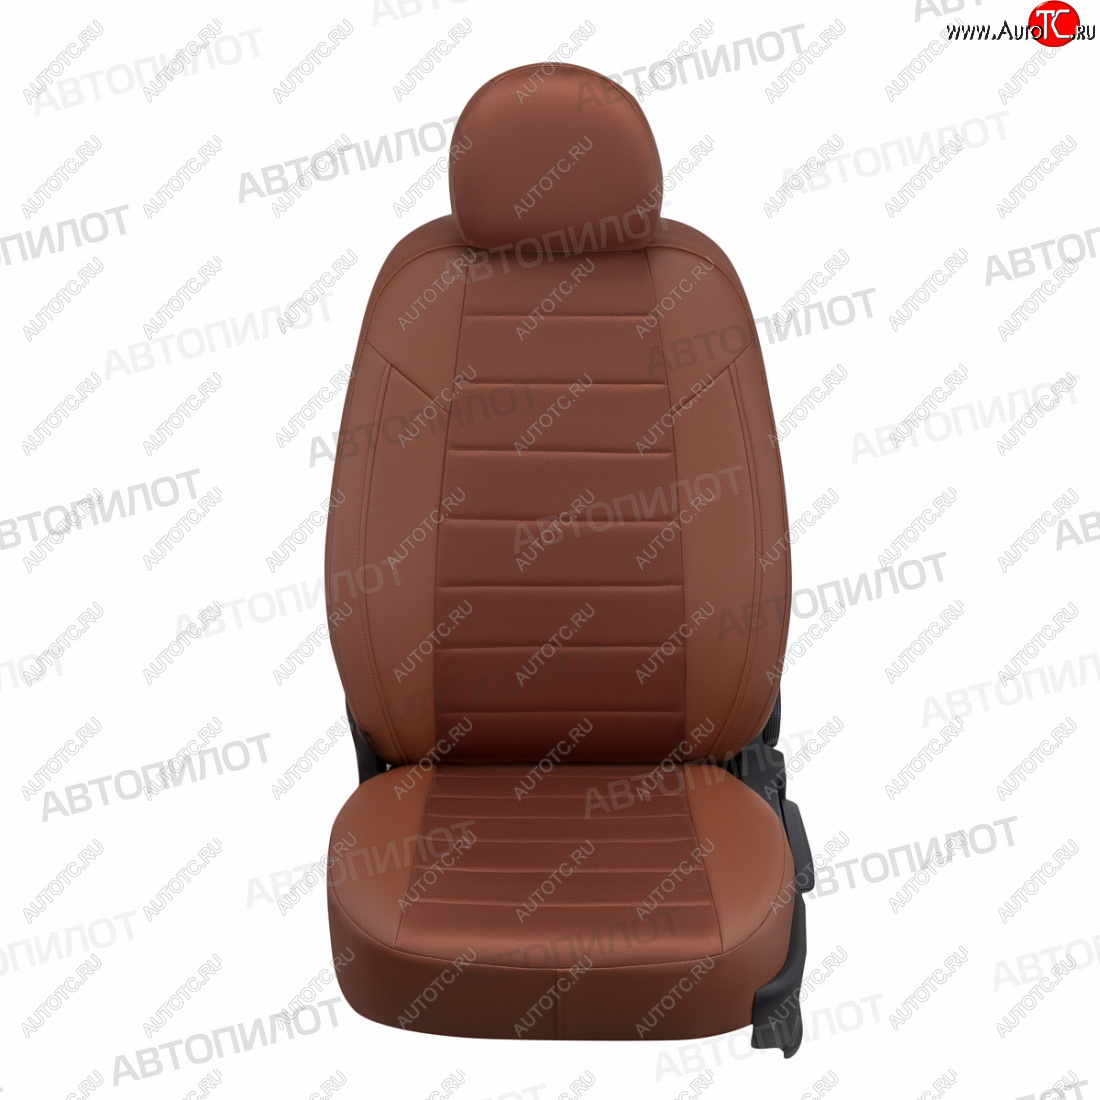 7 499 р. Чехлы сидений (экокожа/алькантара) Автопилот  KIA Ceed  1 ED (2006-2012) (коричневый)